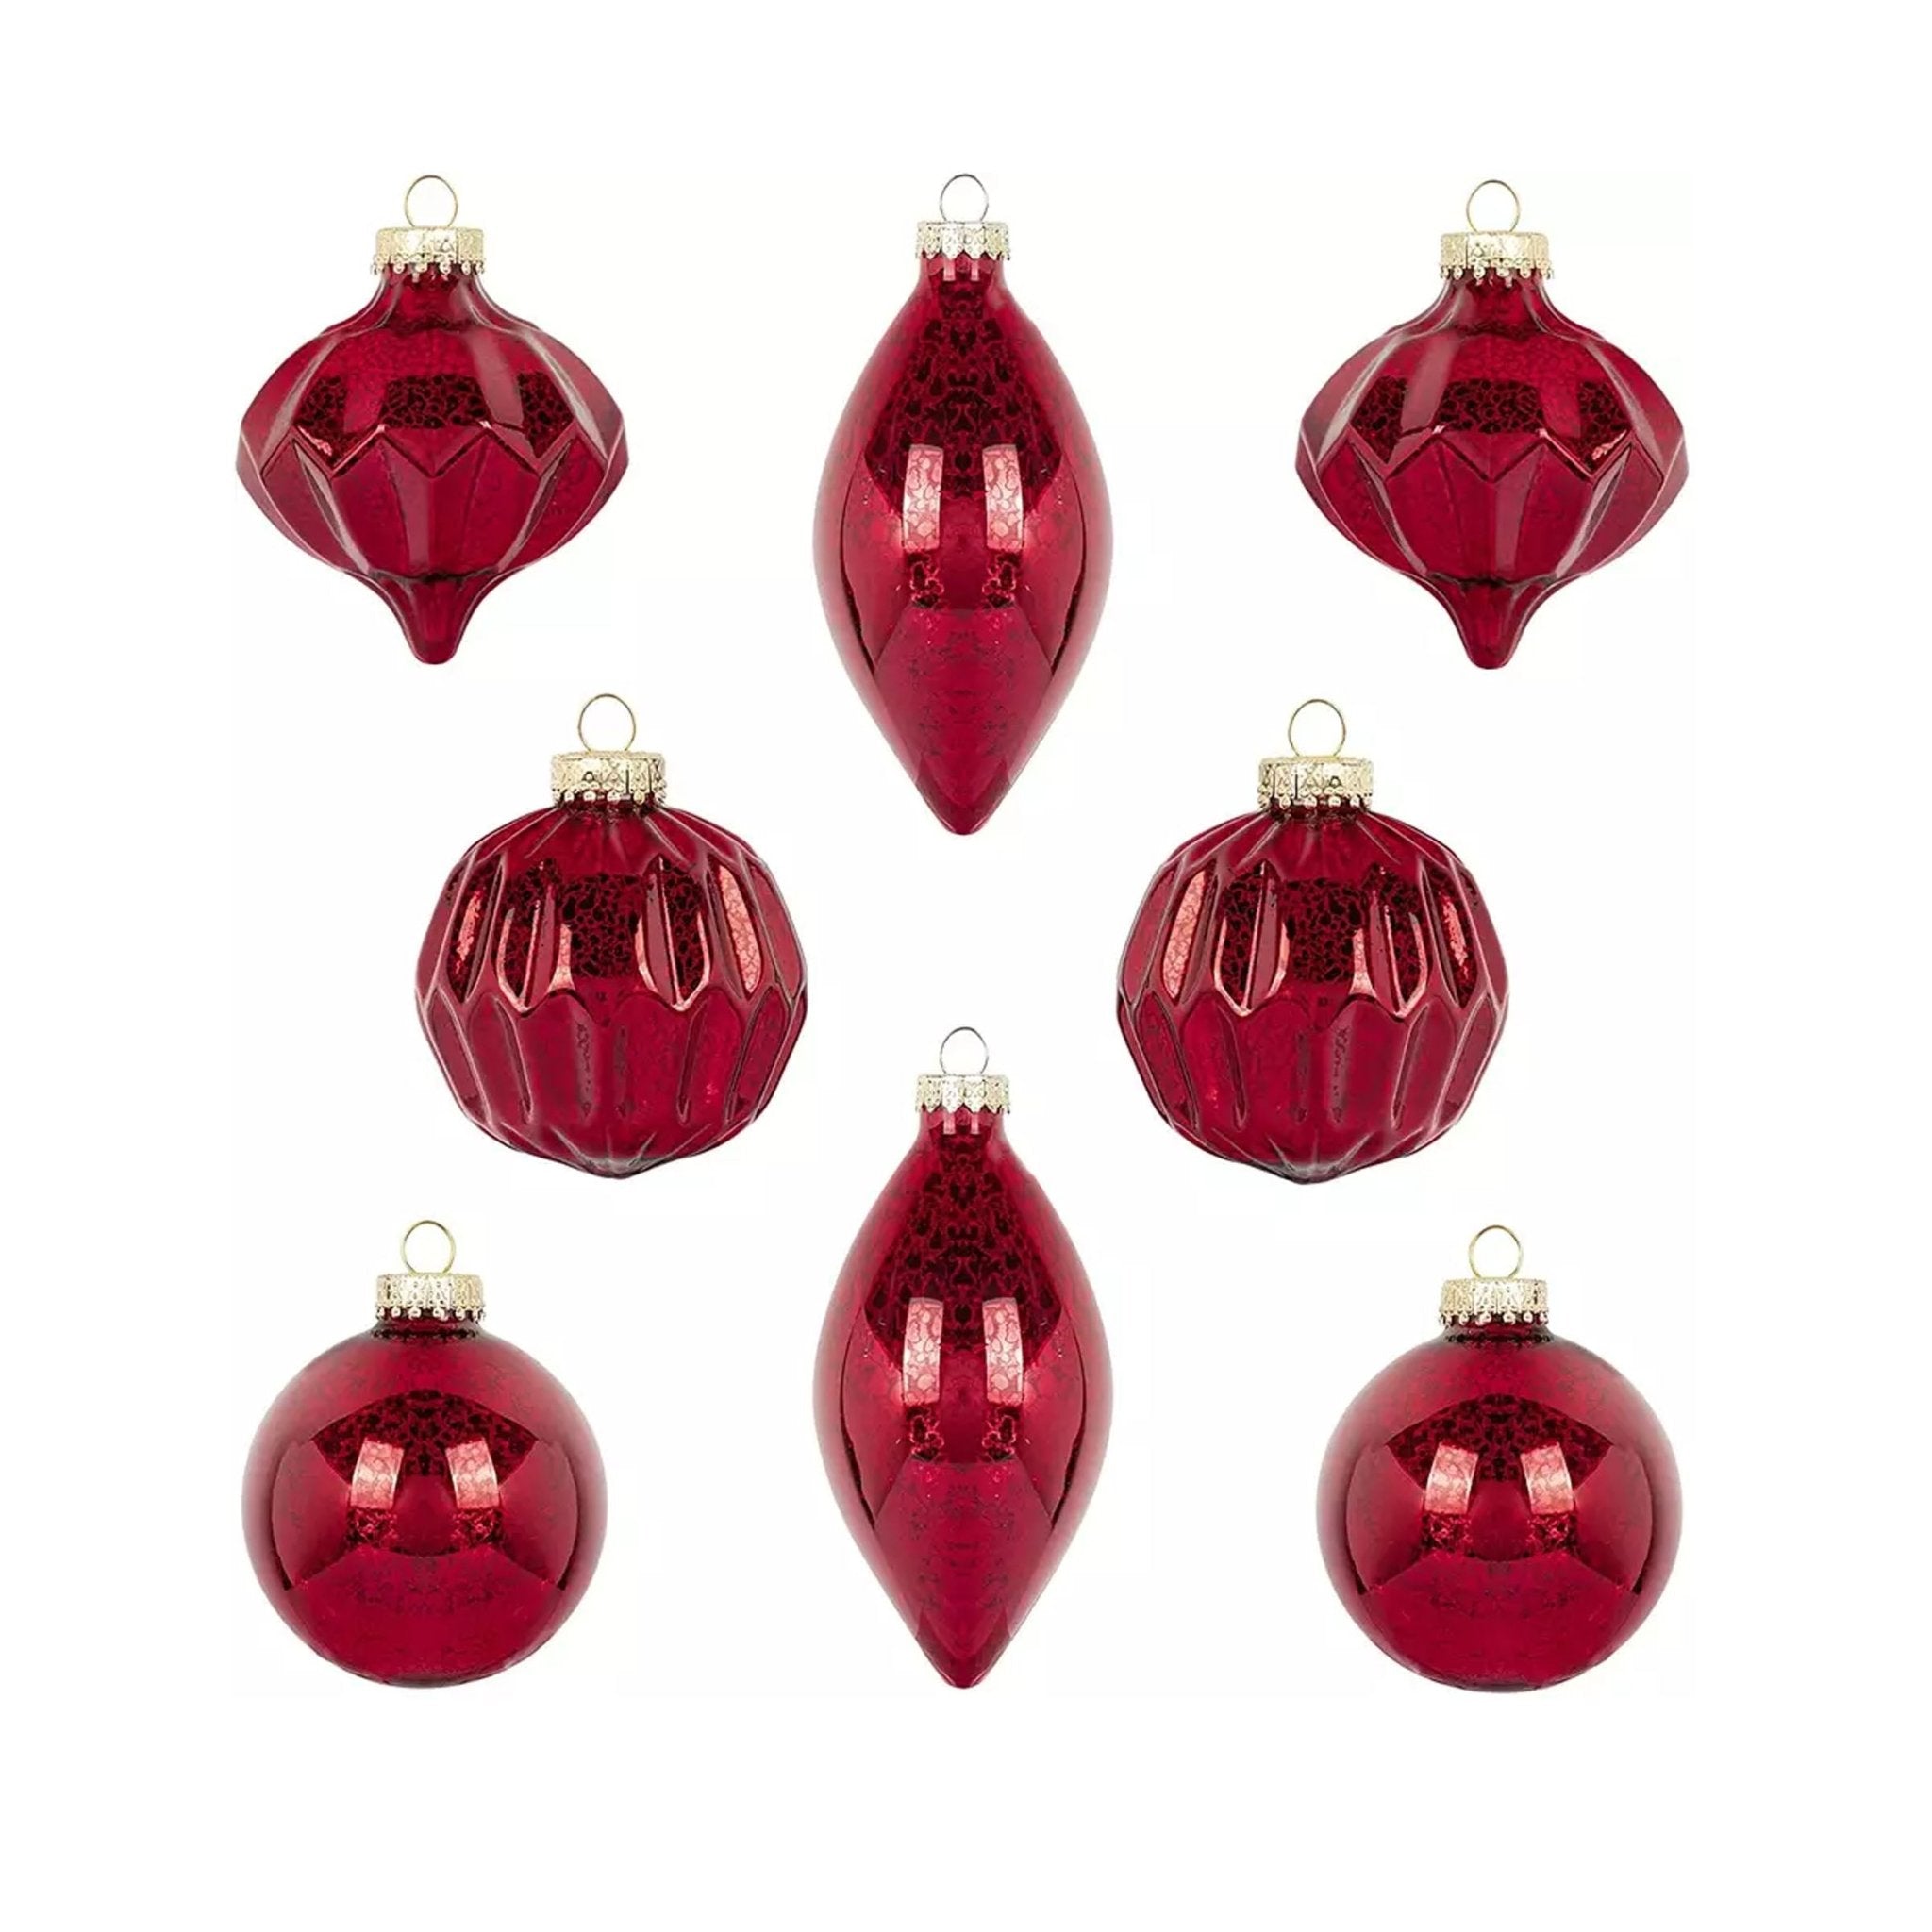 8pcs 8-12.5cm Red Mercury Glass Ornaments Set 0808001G - MODA FLORA Santa's Workshop